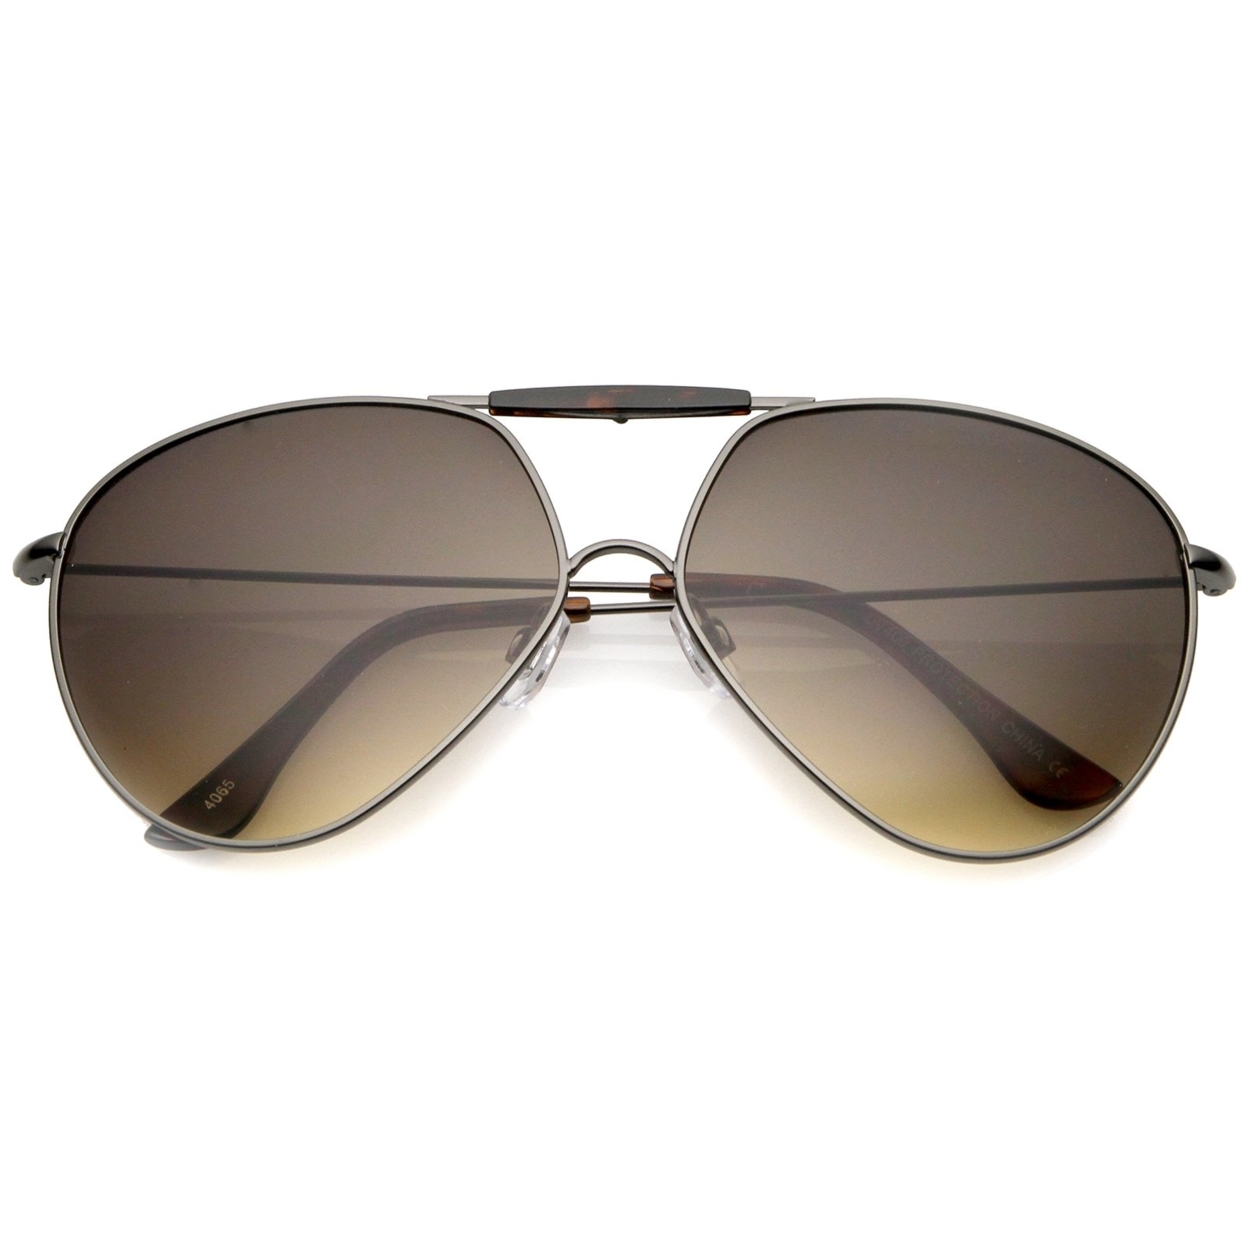 Casual Brow Bar Detail Slim Temple Metal Frame Aviator Sunglasses 62mm - Gold-Tortoise / Green